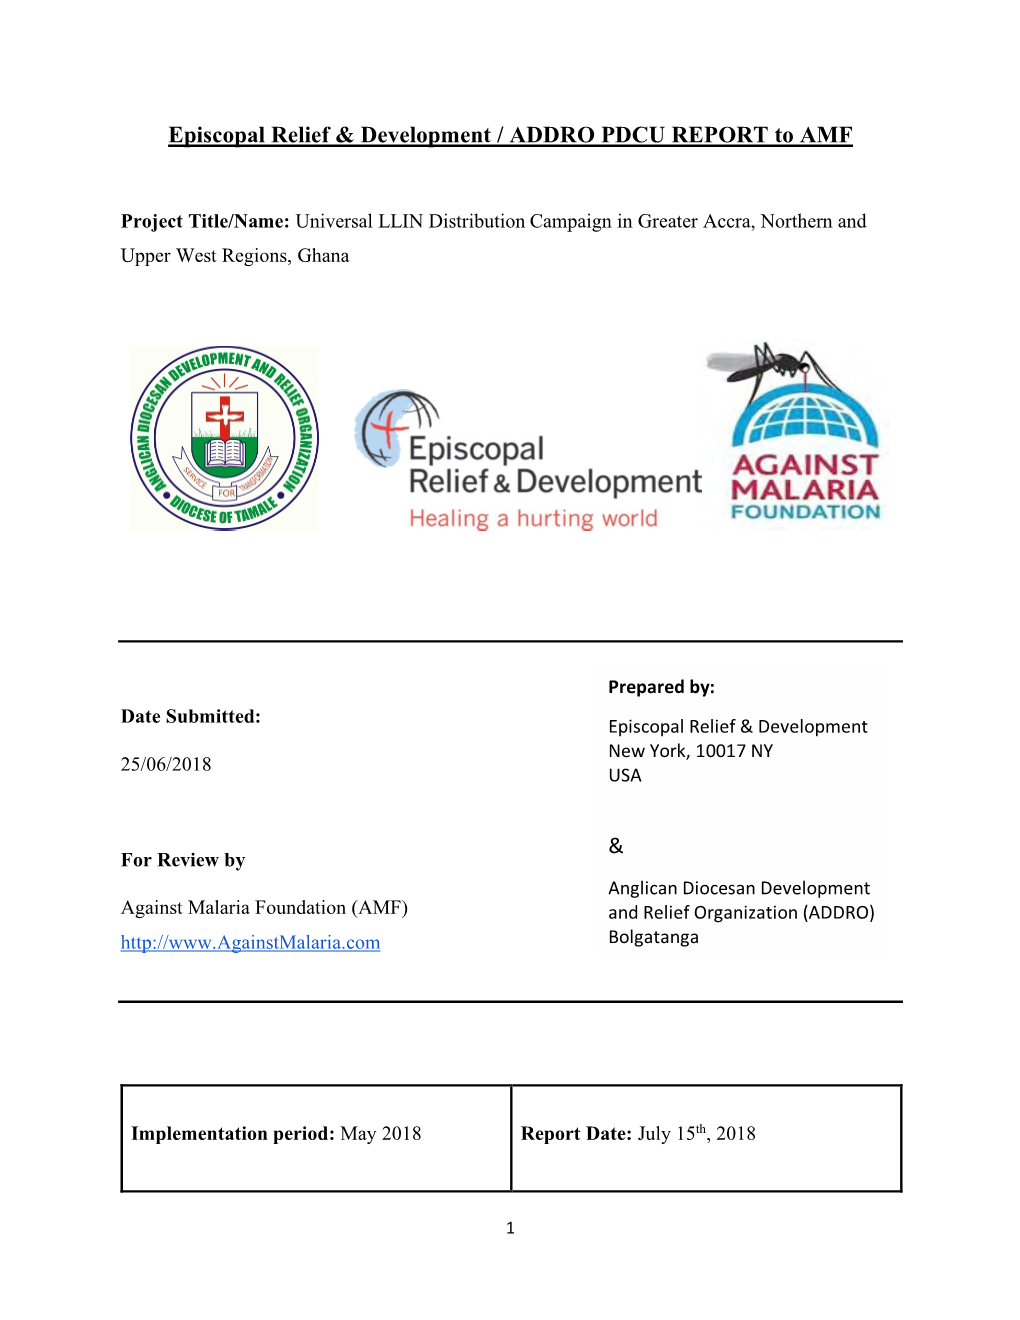 Episcopal Relief & Development / ADDRO PDCU REPORT to AMF &